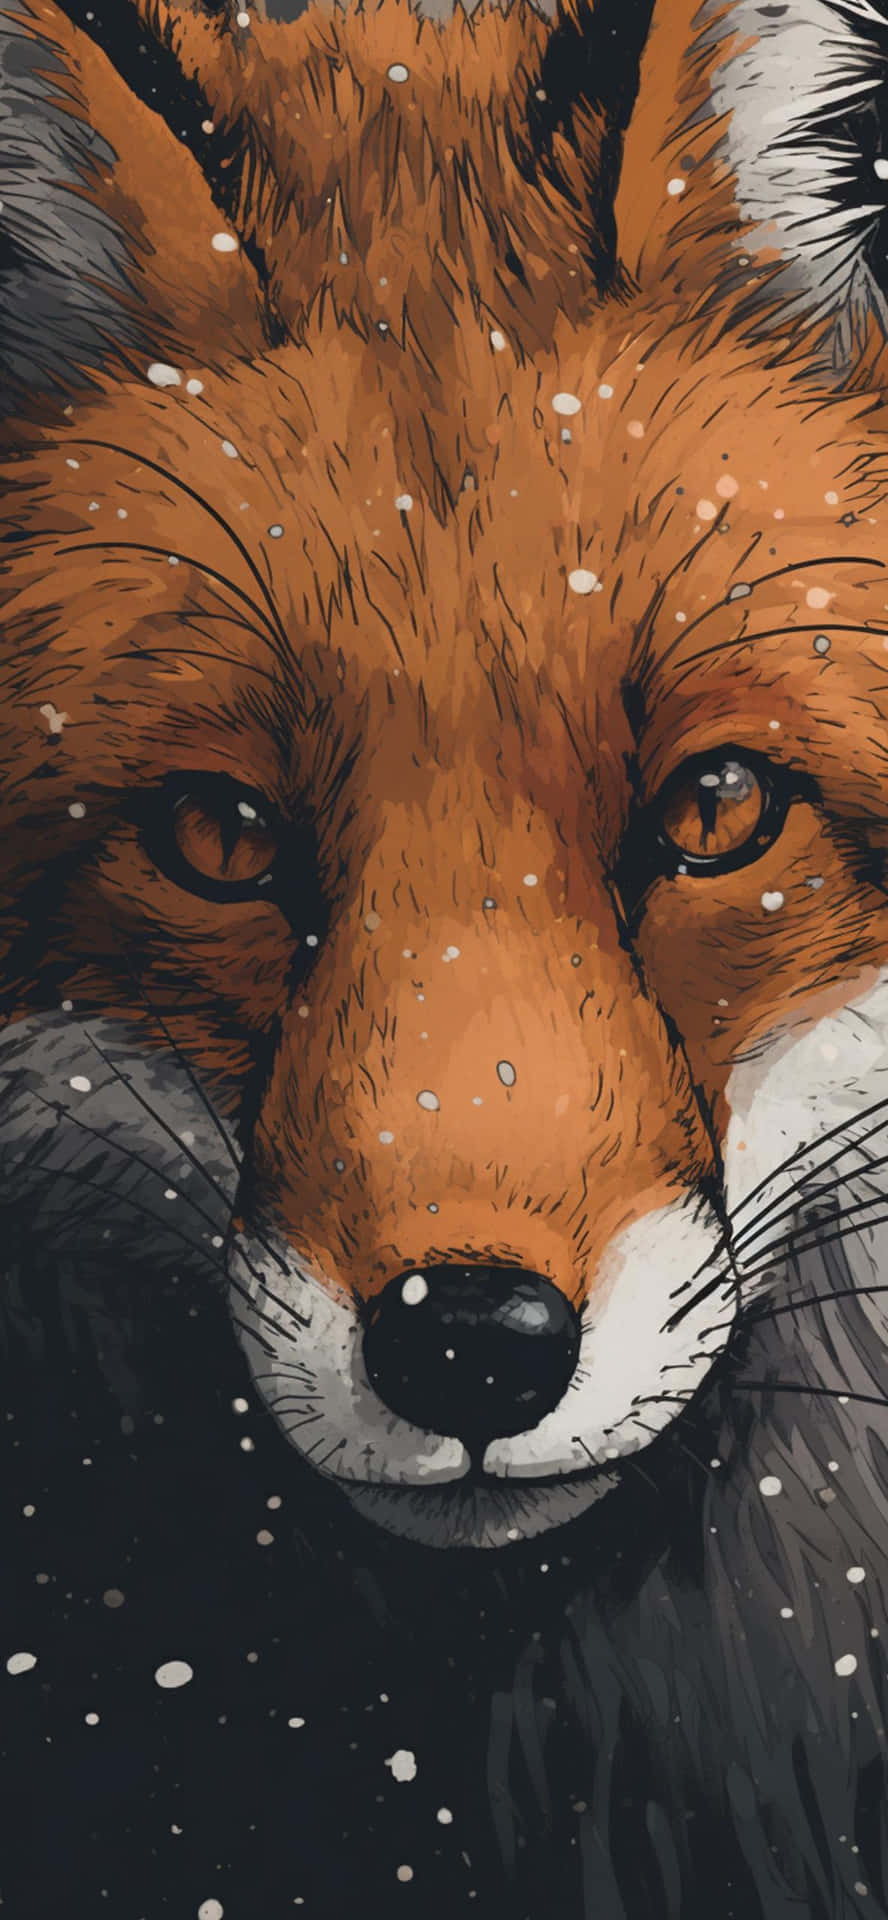 Mystical Fox Portrait Wallpaper